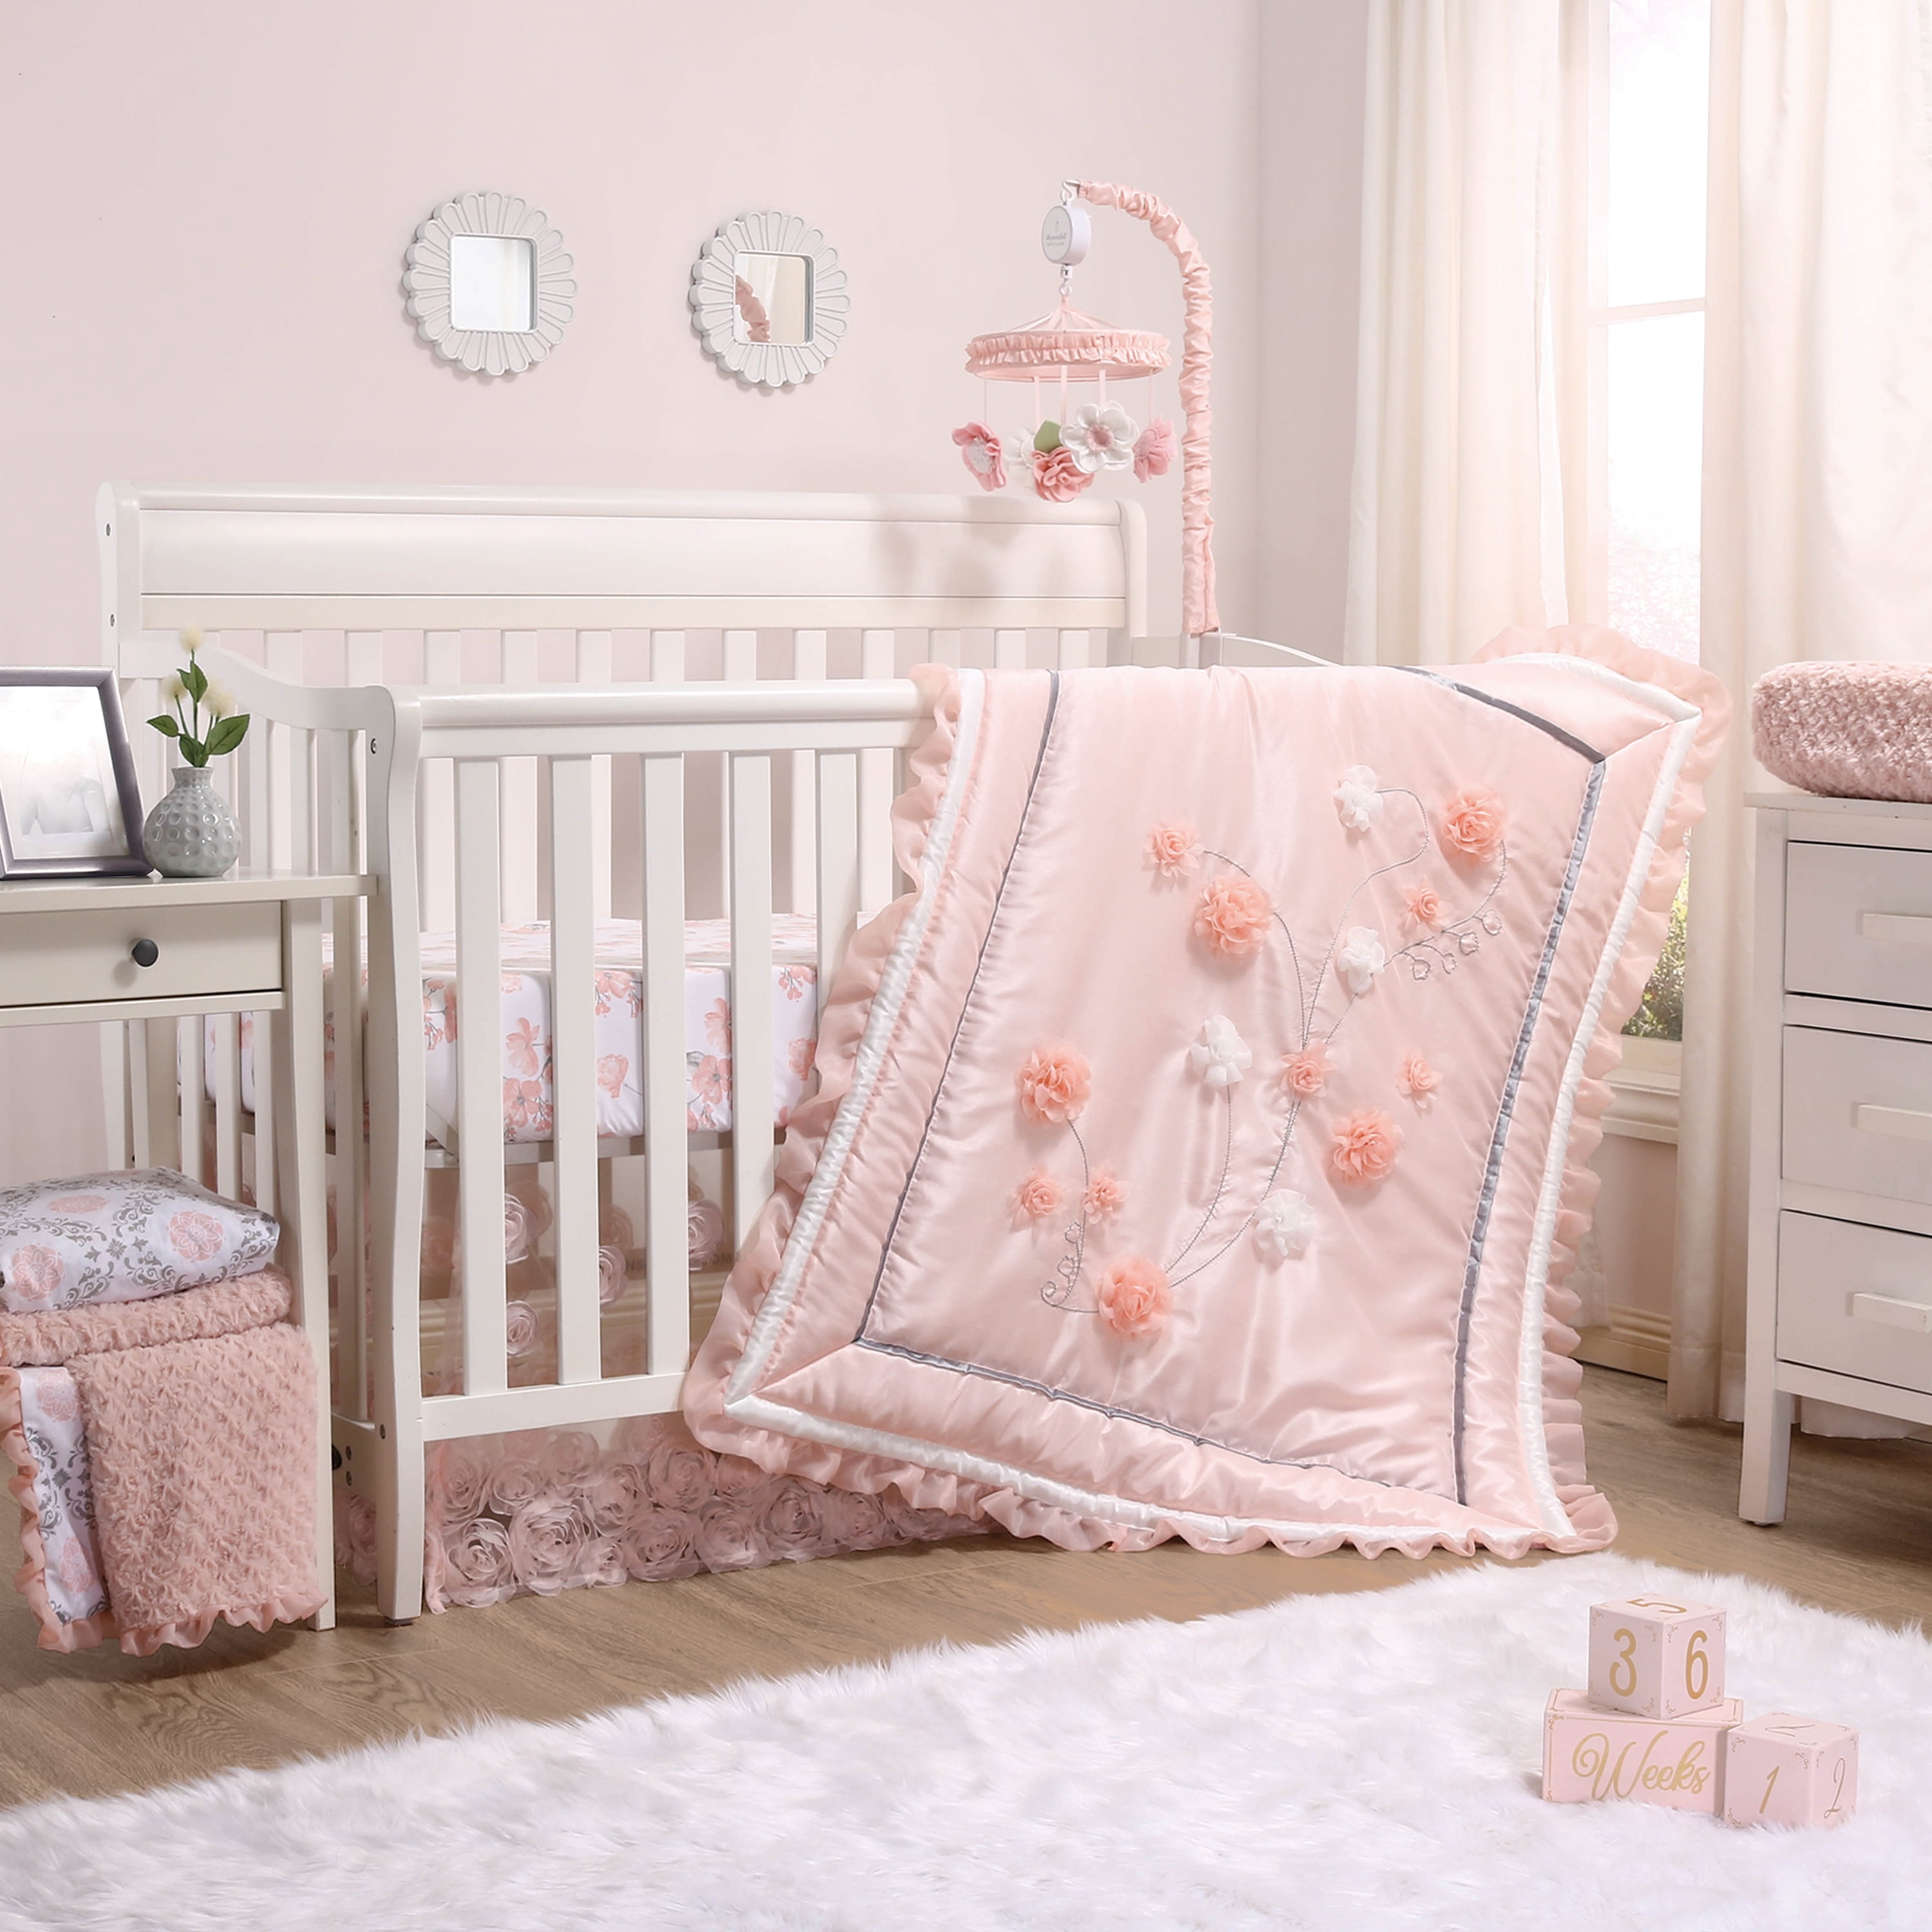 The Peanutshell Brianna Floral Crib 3 Pc Bedding Set For Baby Girls Crib Quilt Crib Sheet Dust Ruffle Walmart Com Walmart Com